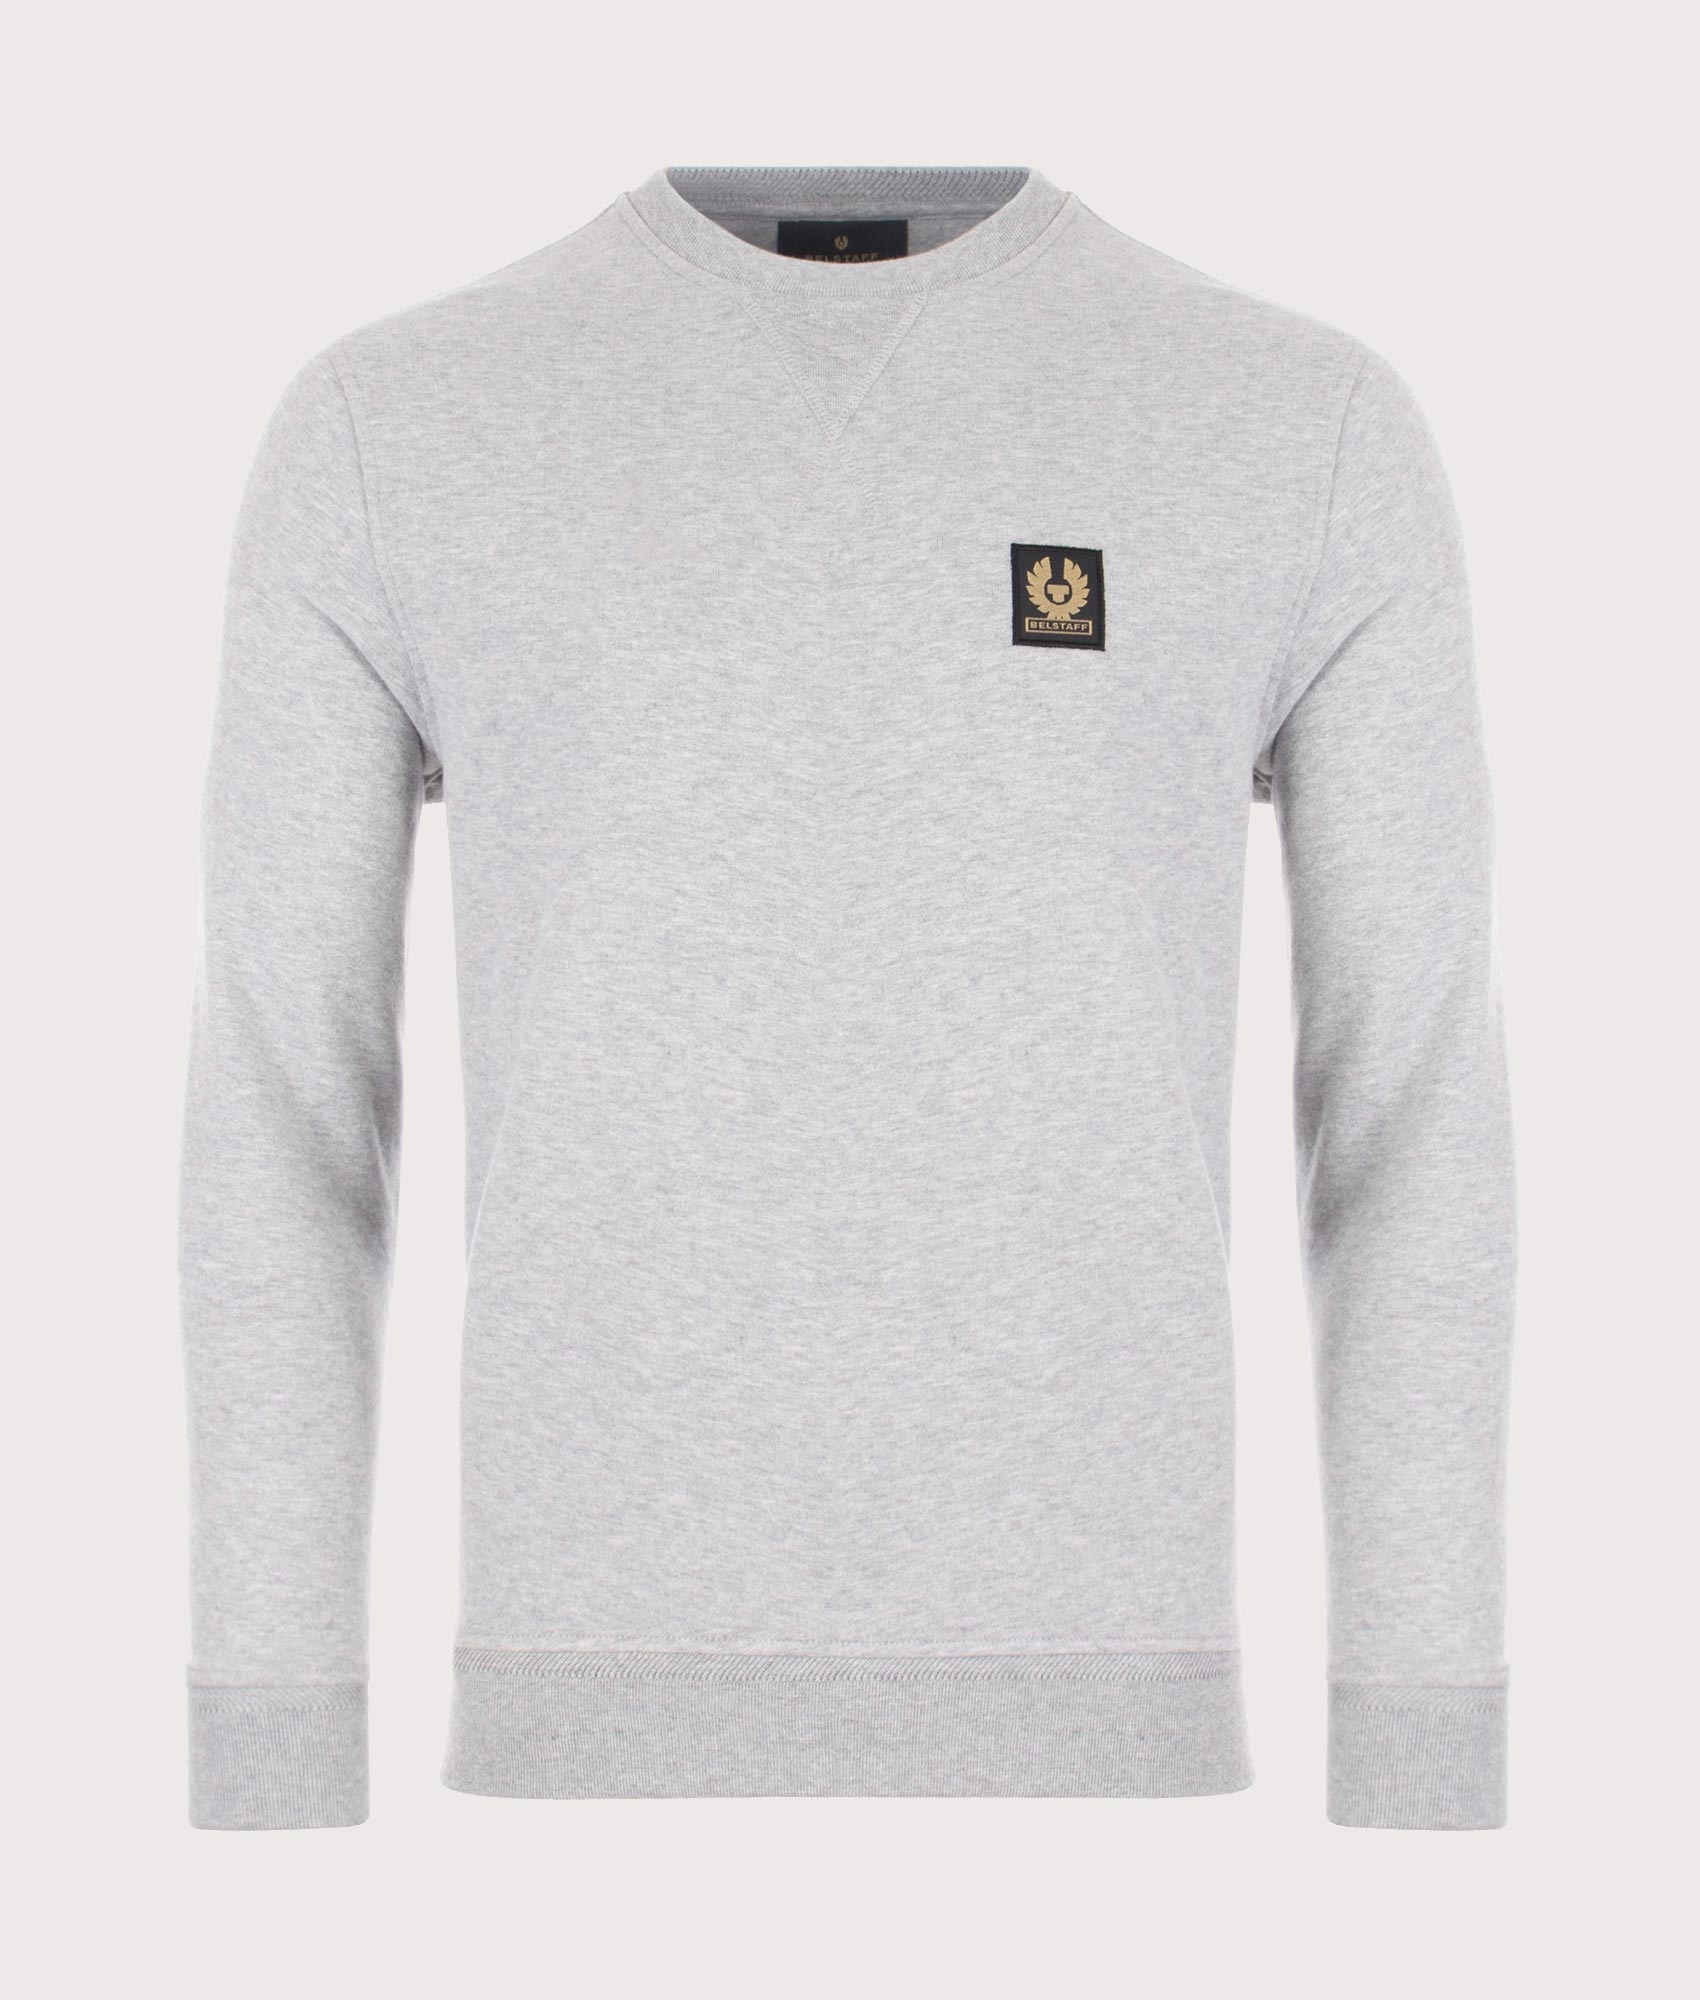 Belstaff Mens Belstaff Sweatshirt - Colour: 90015 Grey Melange - Size: Medium